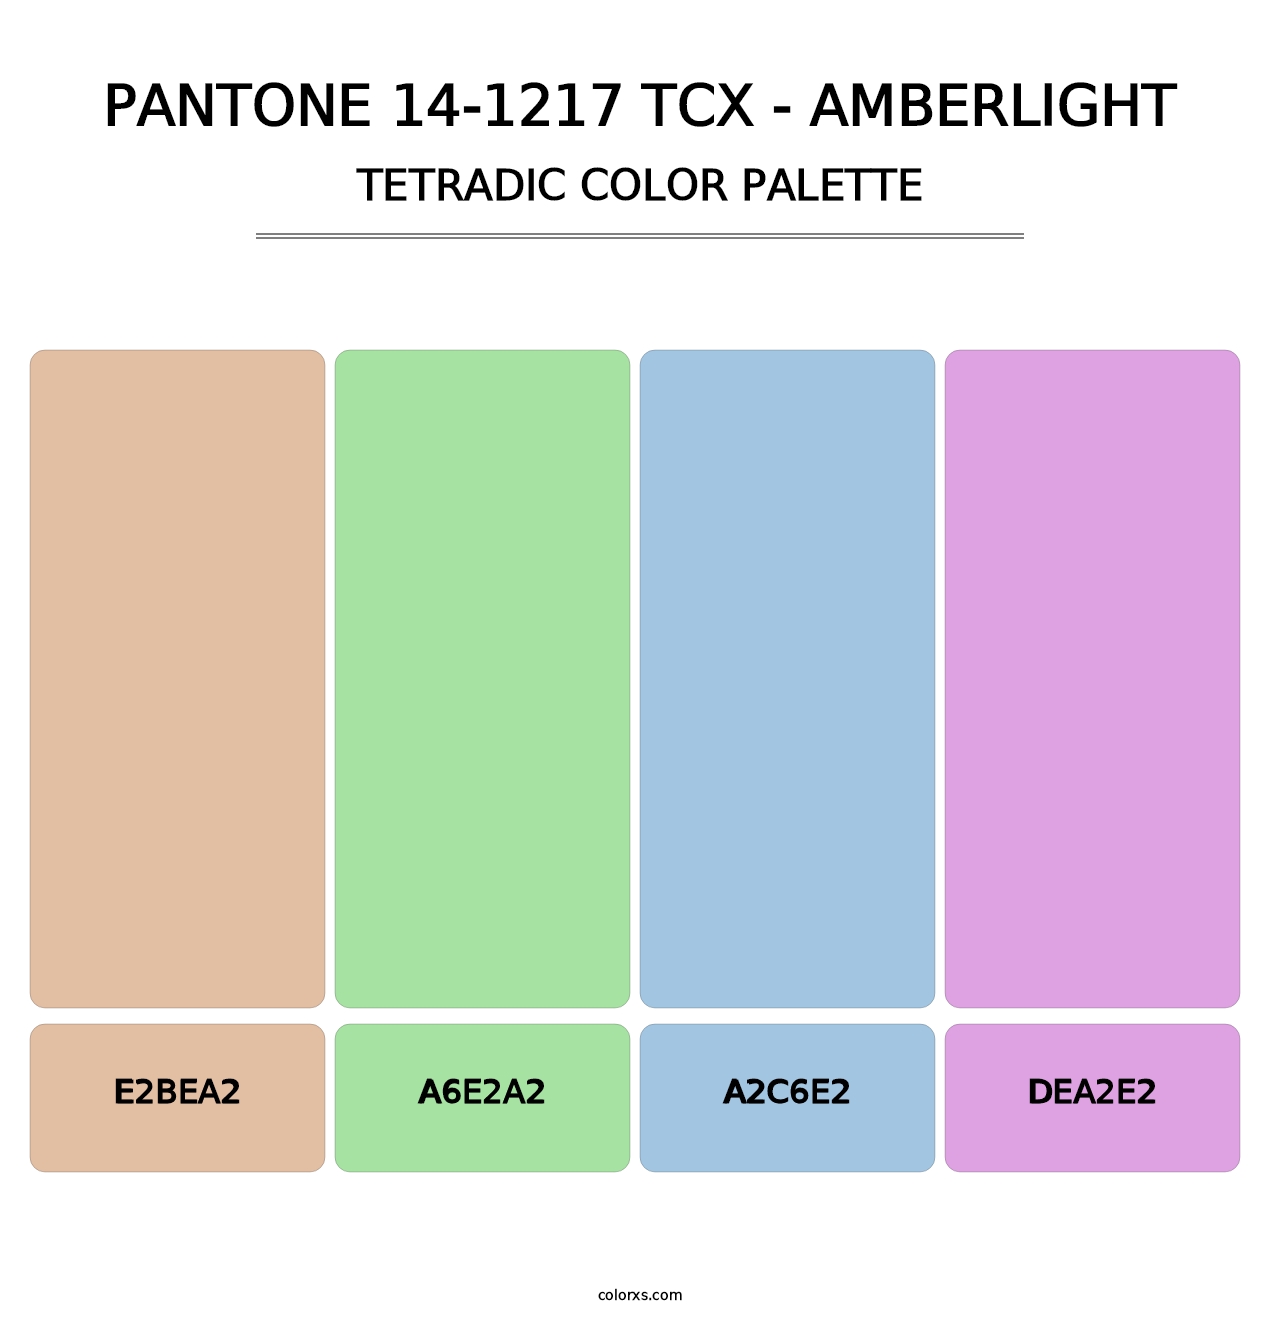 PANTONE 14-1217 TCX - Amberlight - Tetradic Color Palette